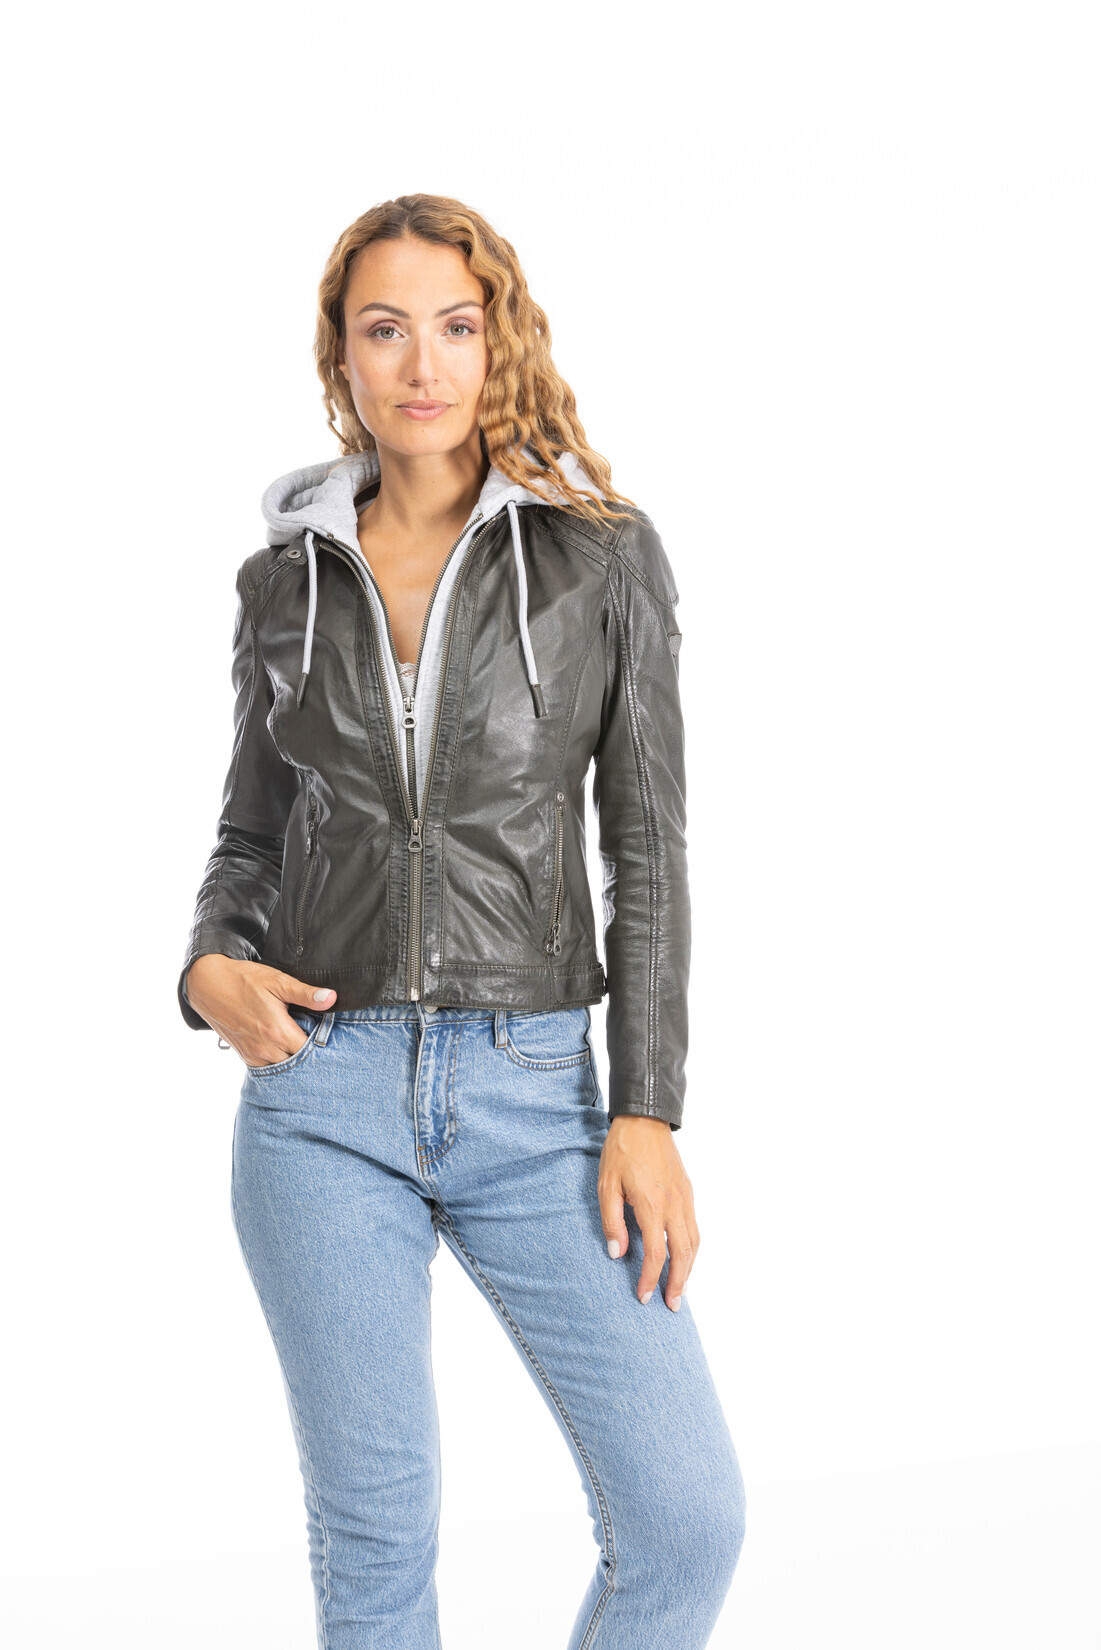 GIPSY jackets 14566 Bomber olive-olive lamb-ref leather \